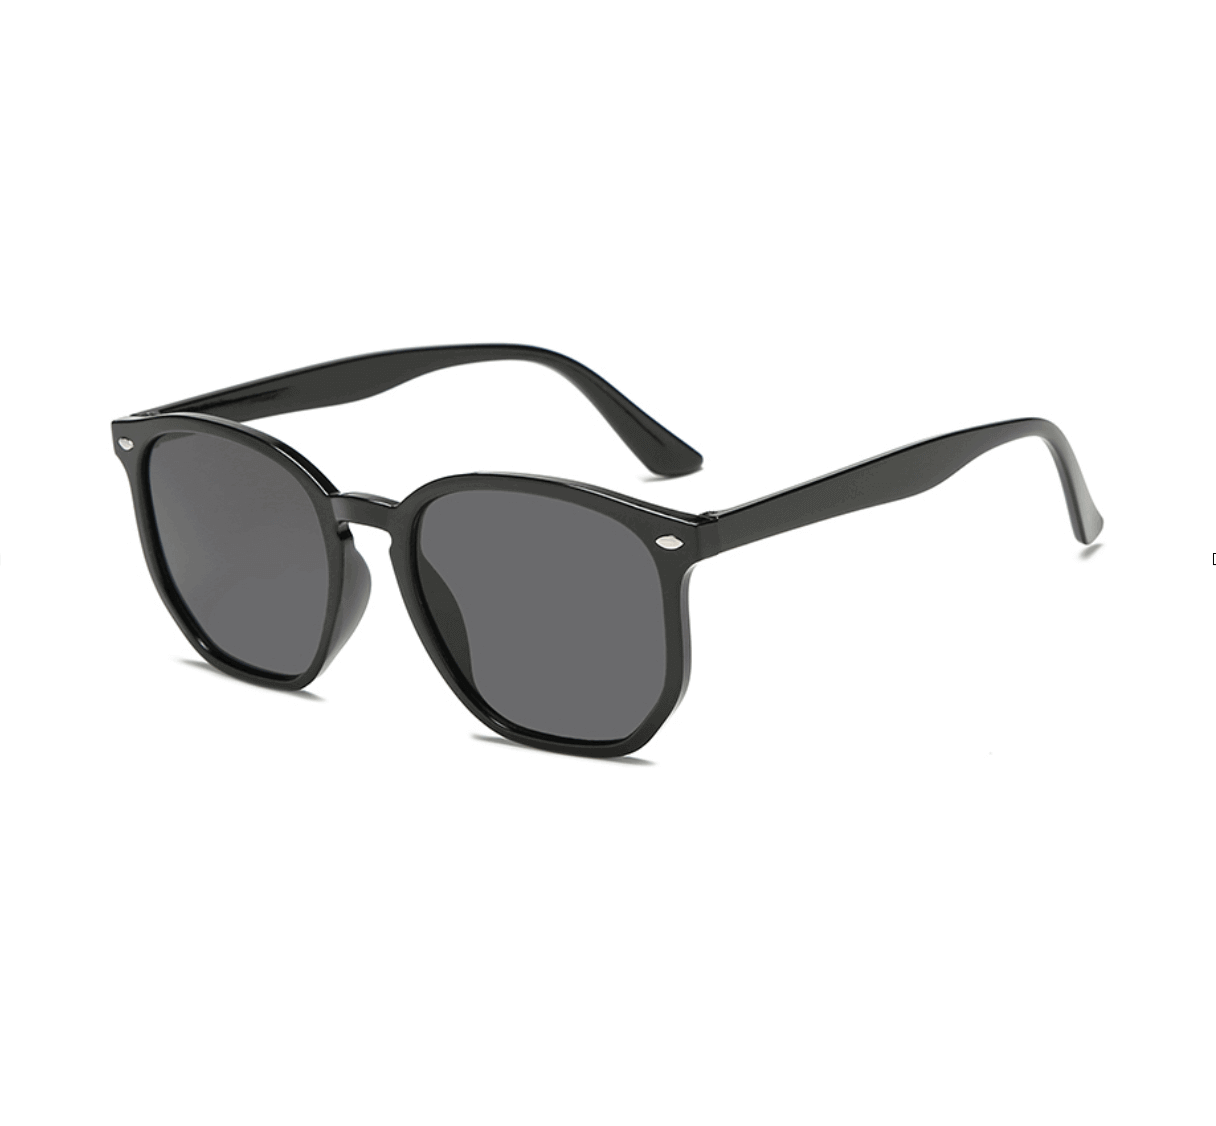 Polarized Wholesale Sunglasses from China Sunglasses Manufacturer